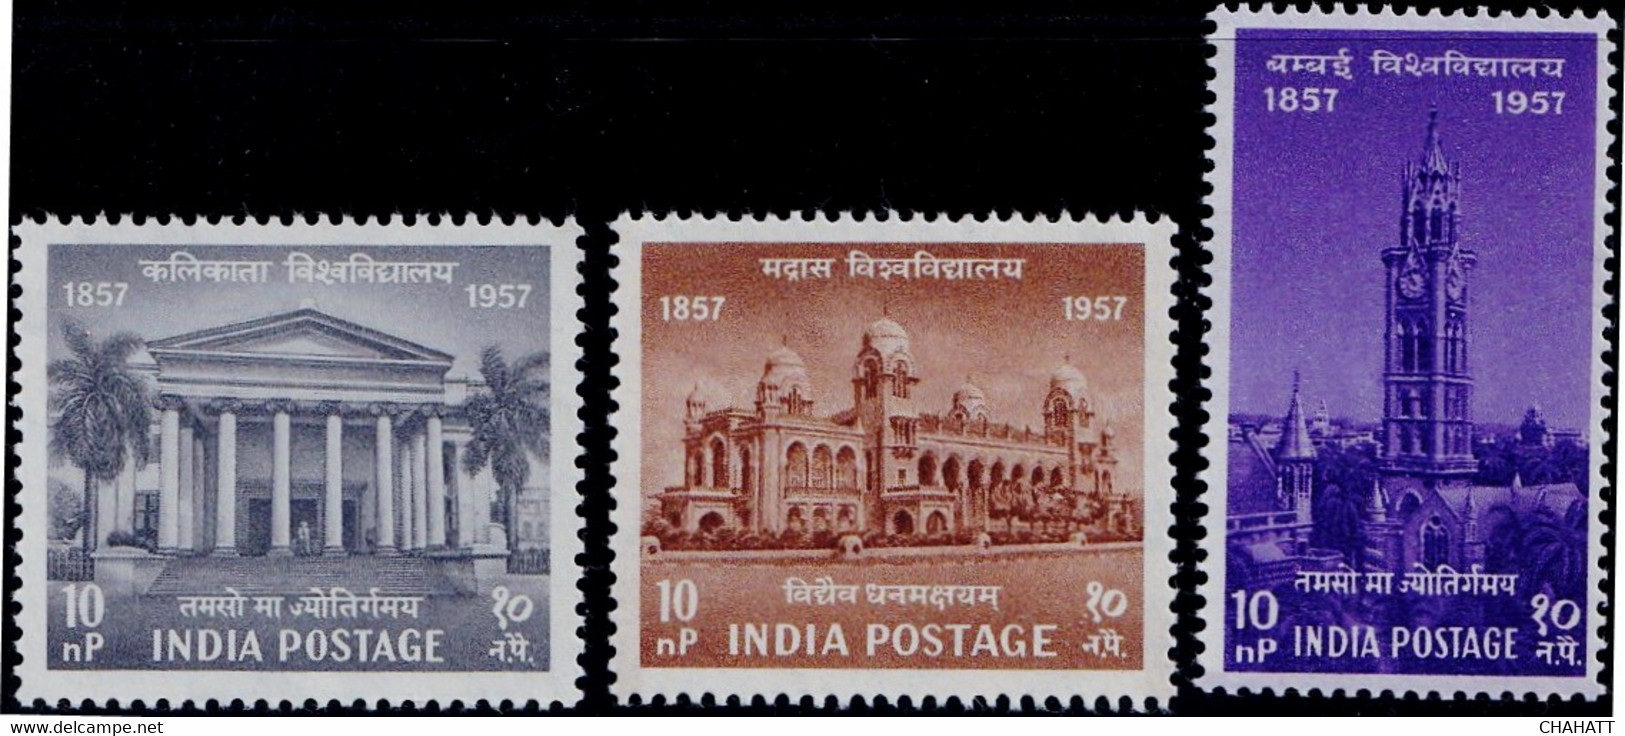 EDUCATION- UNIVERSITIES OF KOLKATA, MADRAS AND BOMBAY- SET OF 3- INDIA-1957- MNH-D5-107 - Nuevos